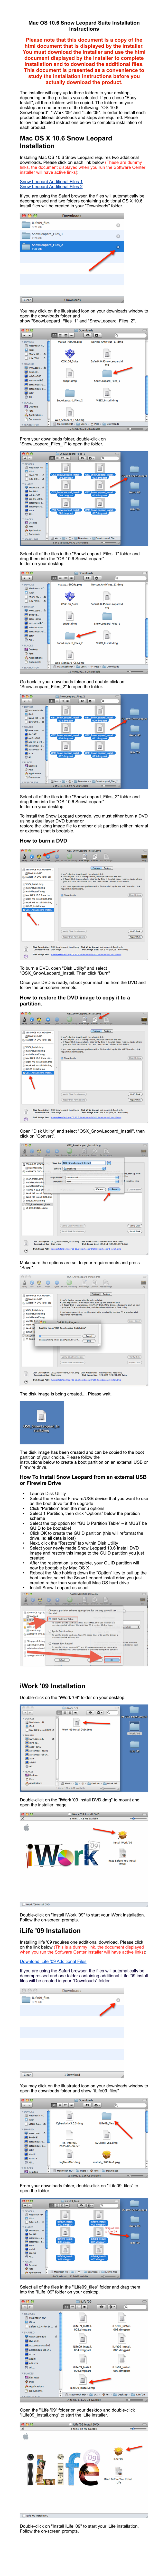 Mac OS X 10.6 Snow Leopard Installation